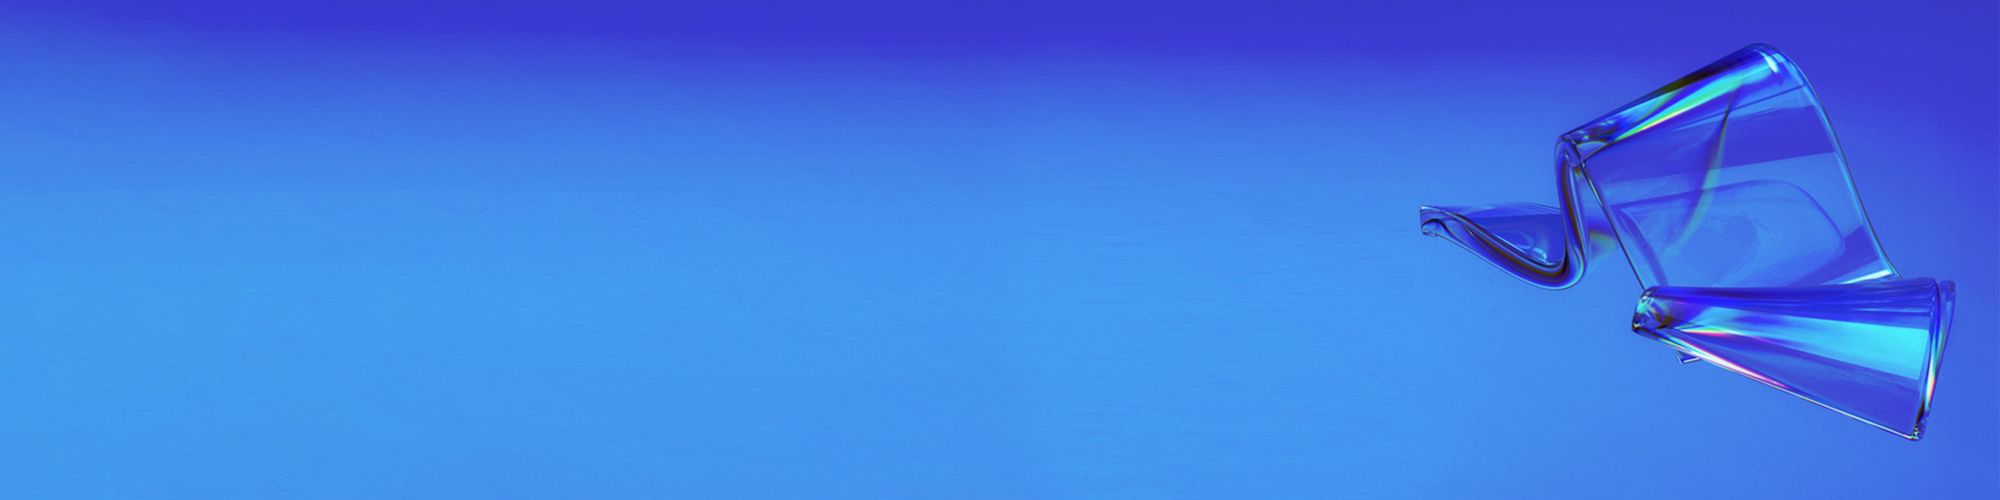 acrylic-blue-swirl